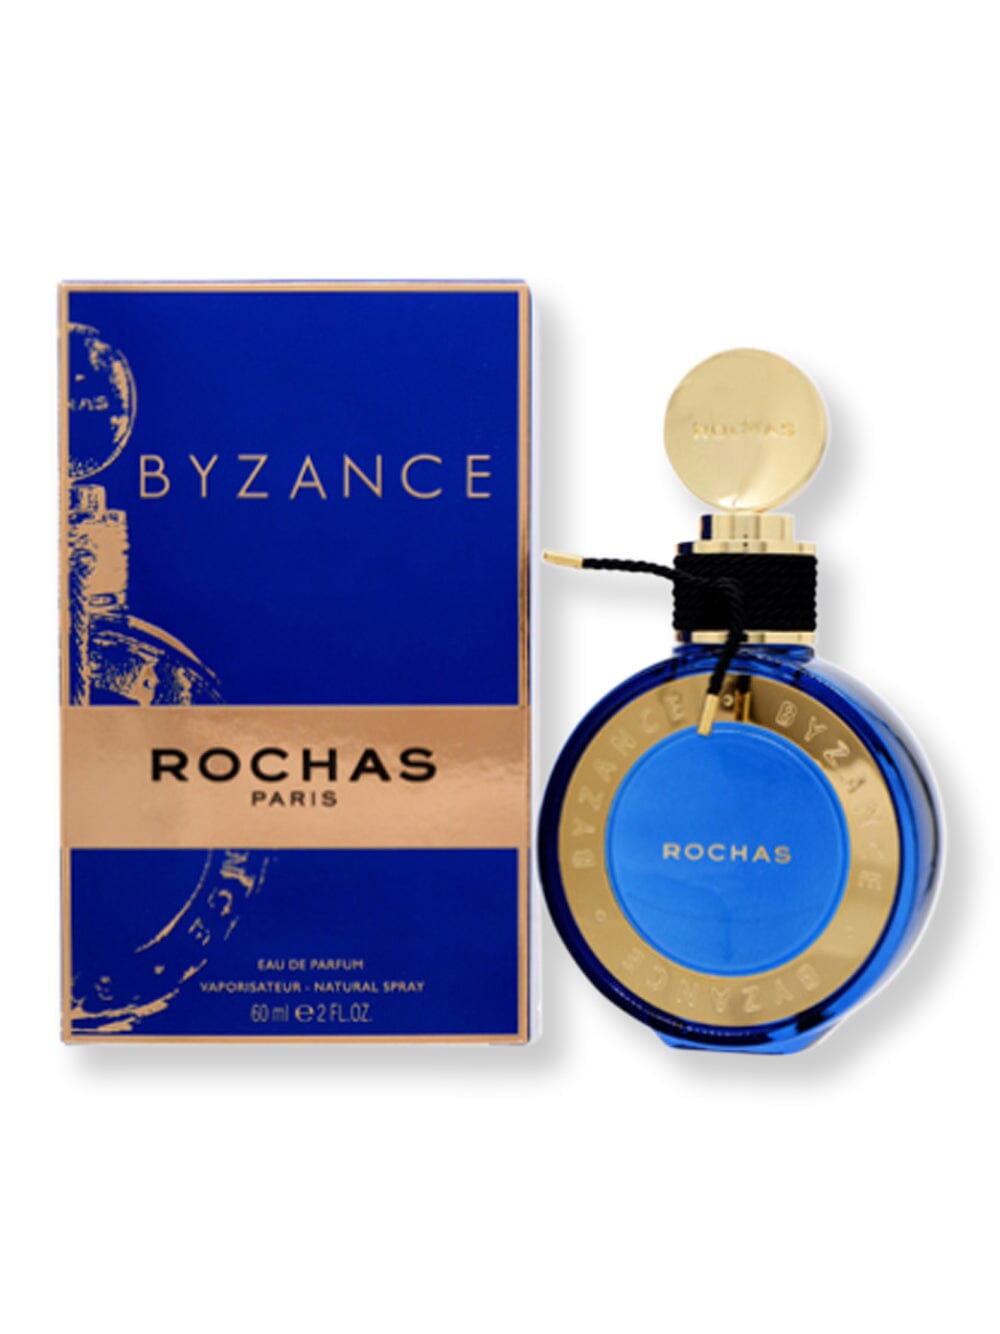 Rochas Rochas Byzance EDP Spray 2 oz60 ml Perfume 